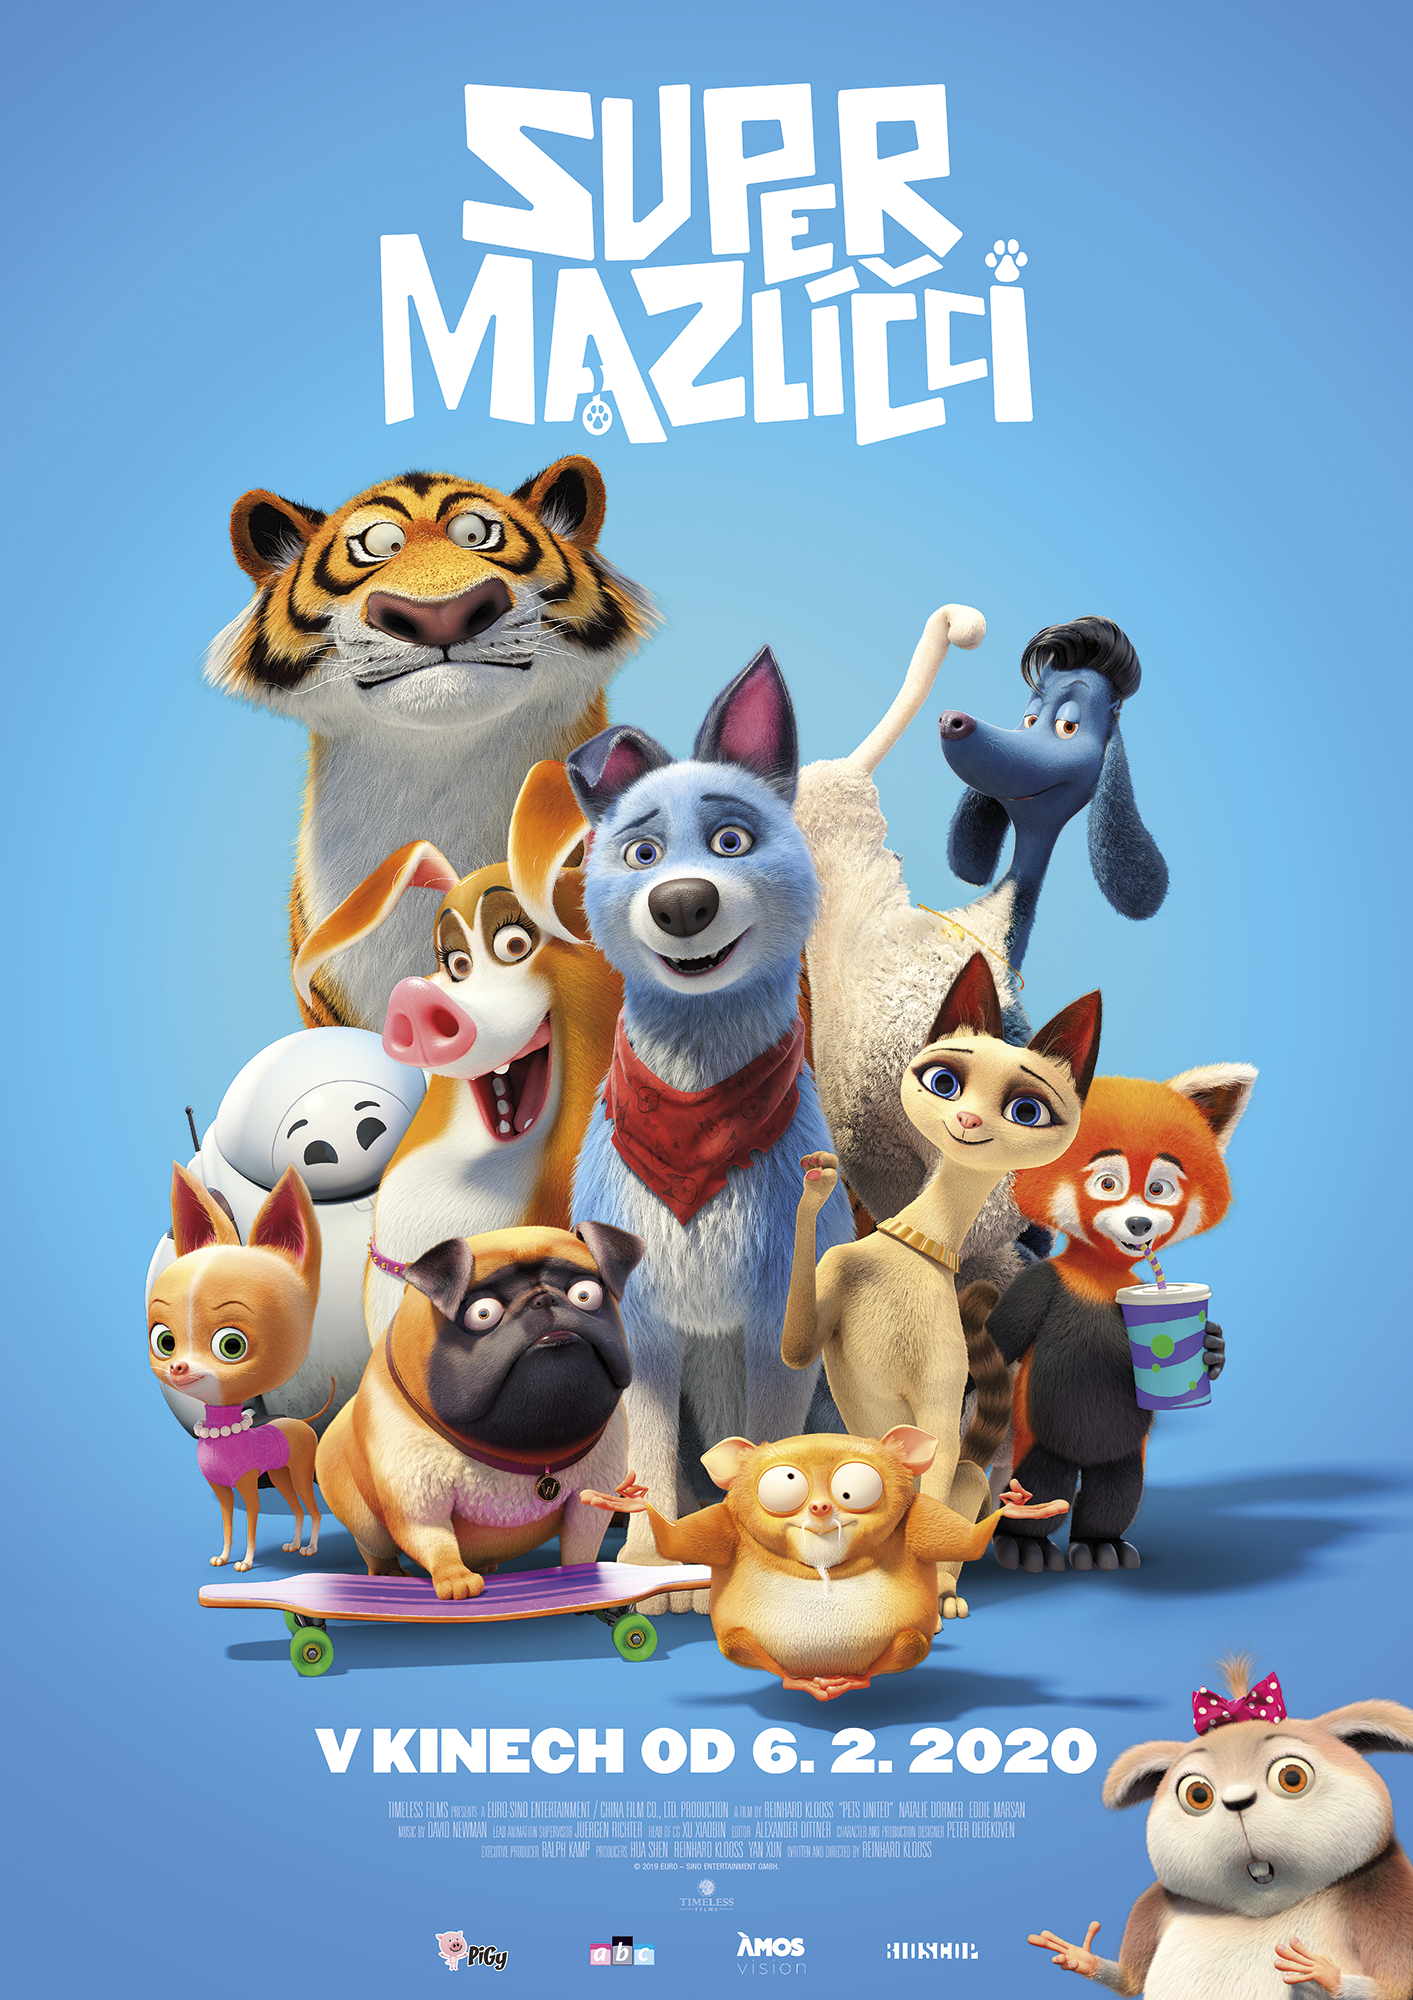 Stiahni si Filmy Kreslené     Super mazlicci / Pets United (2019)(CZ/SK)[WebRip][1080p] = CSFD 33%